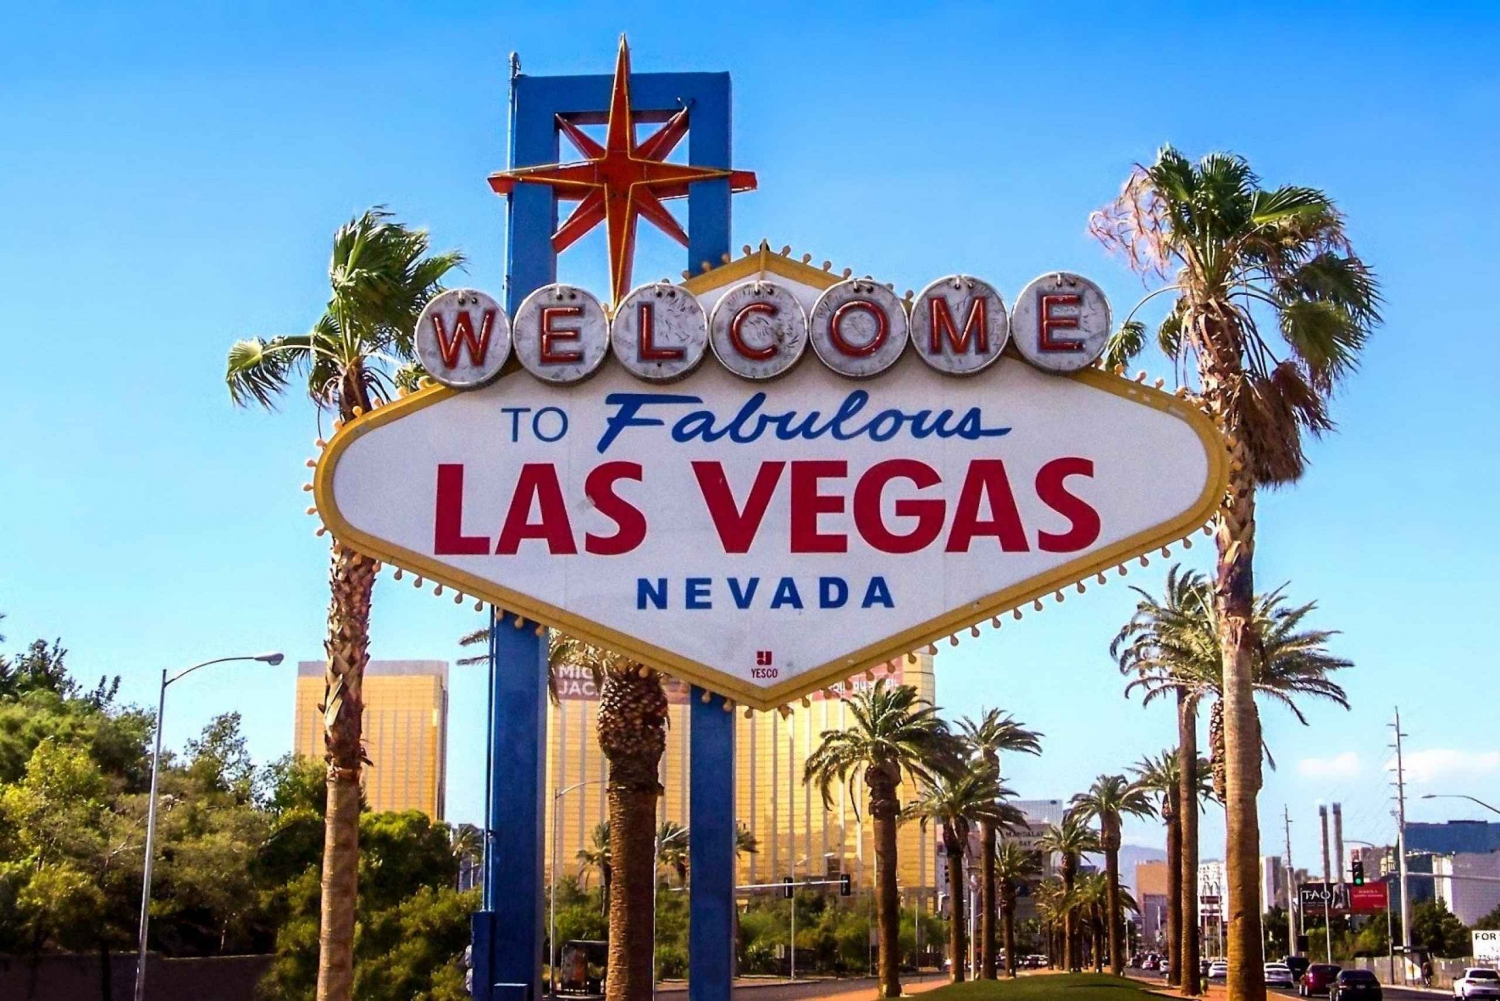 Vegas: Ildens dal, De syv magiske bjerge, Las Vegas-skiltet